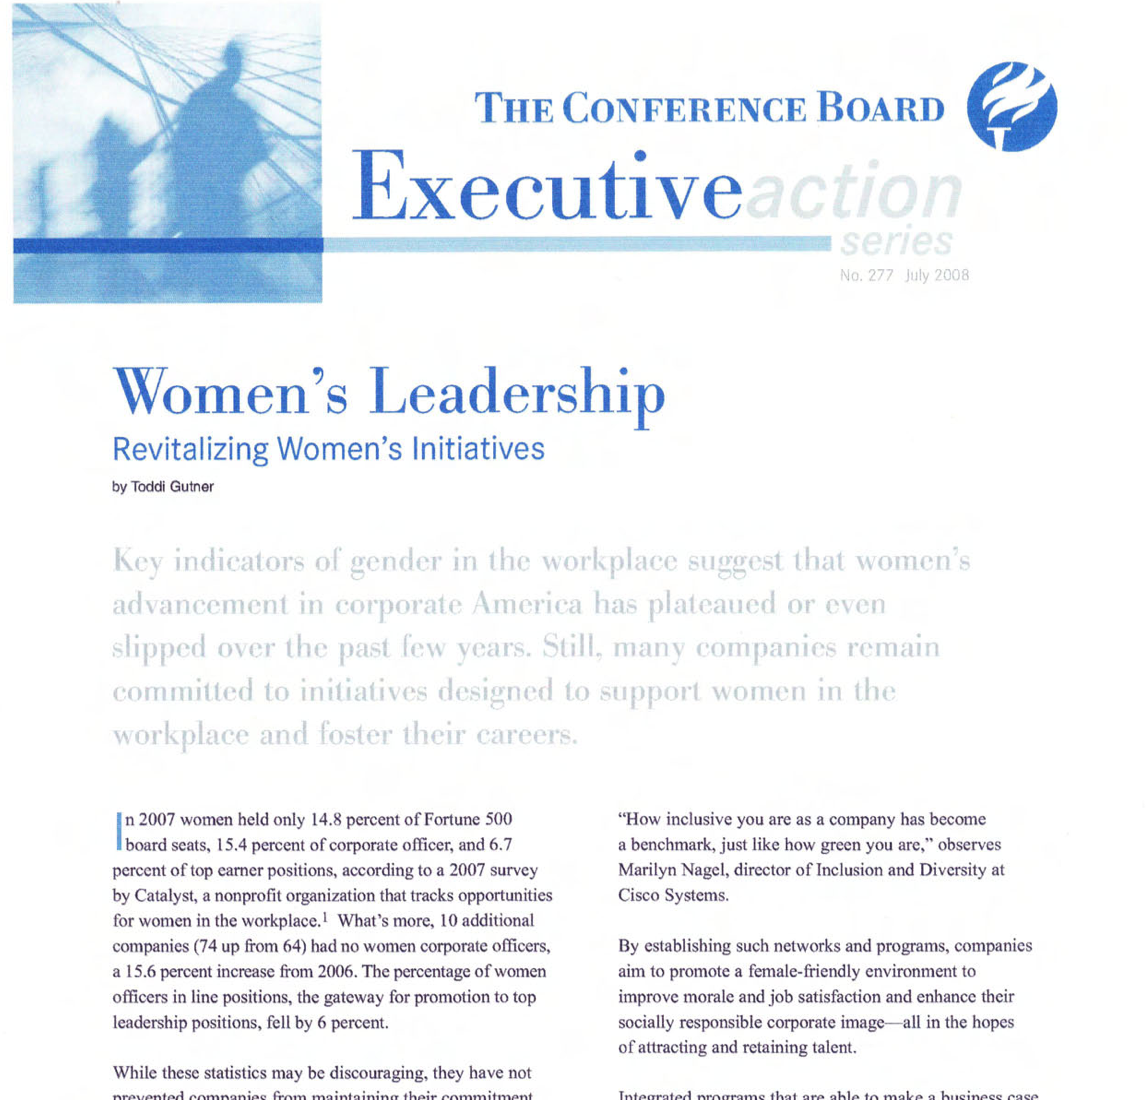 Women's leadership